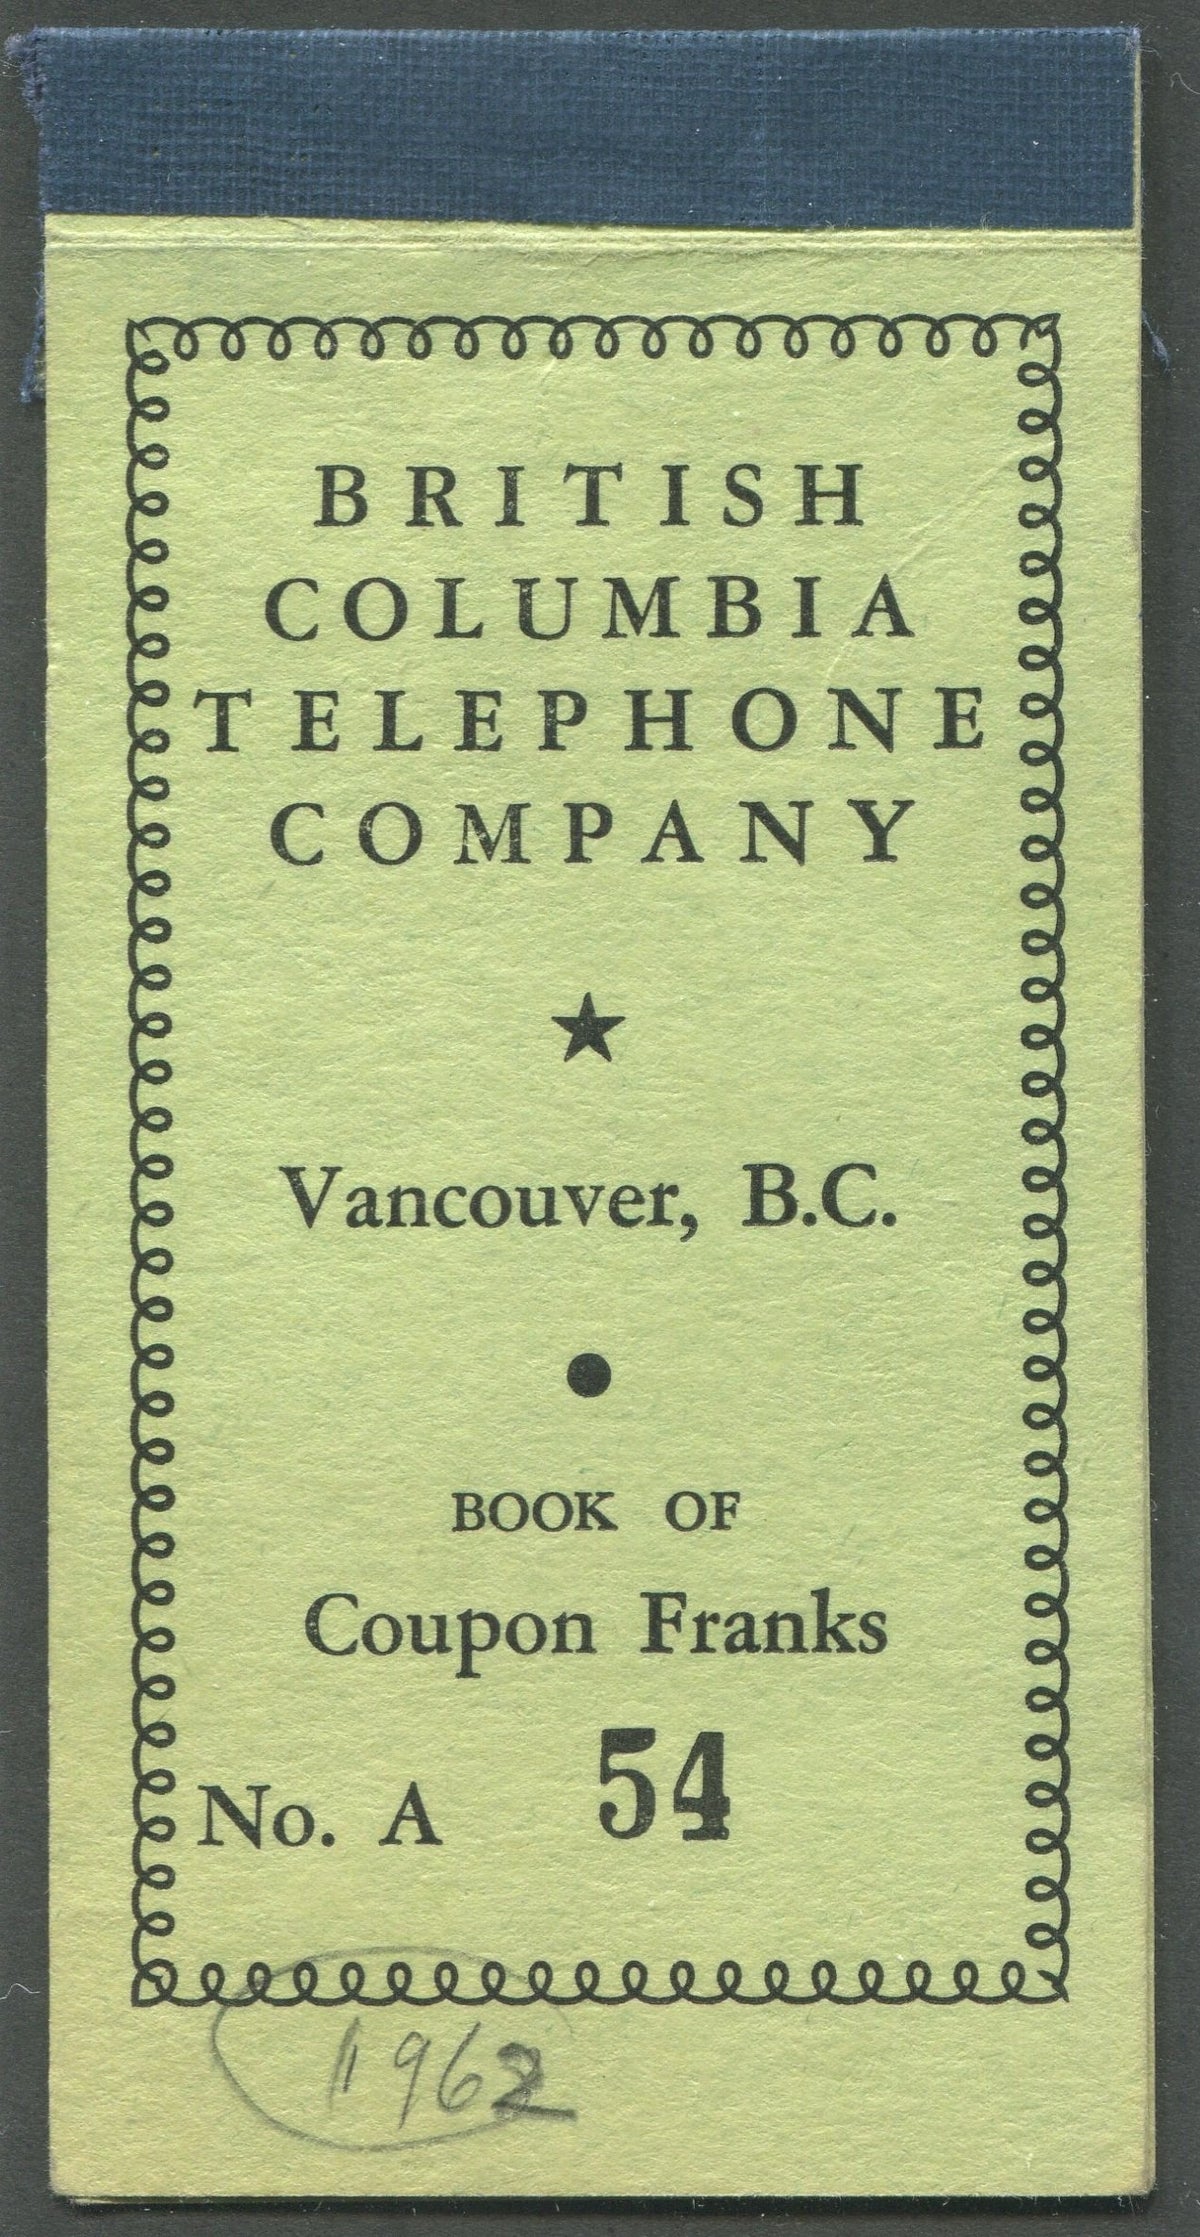 0294BC1708 - BCT196, BCT197, BCT198 - 1962 Booklet